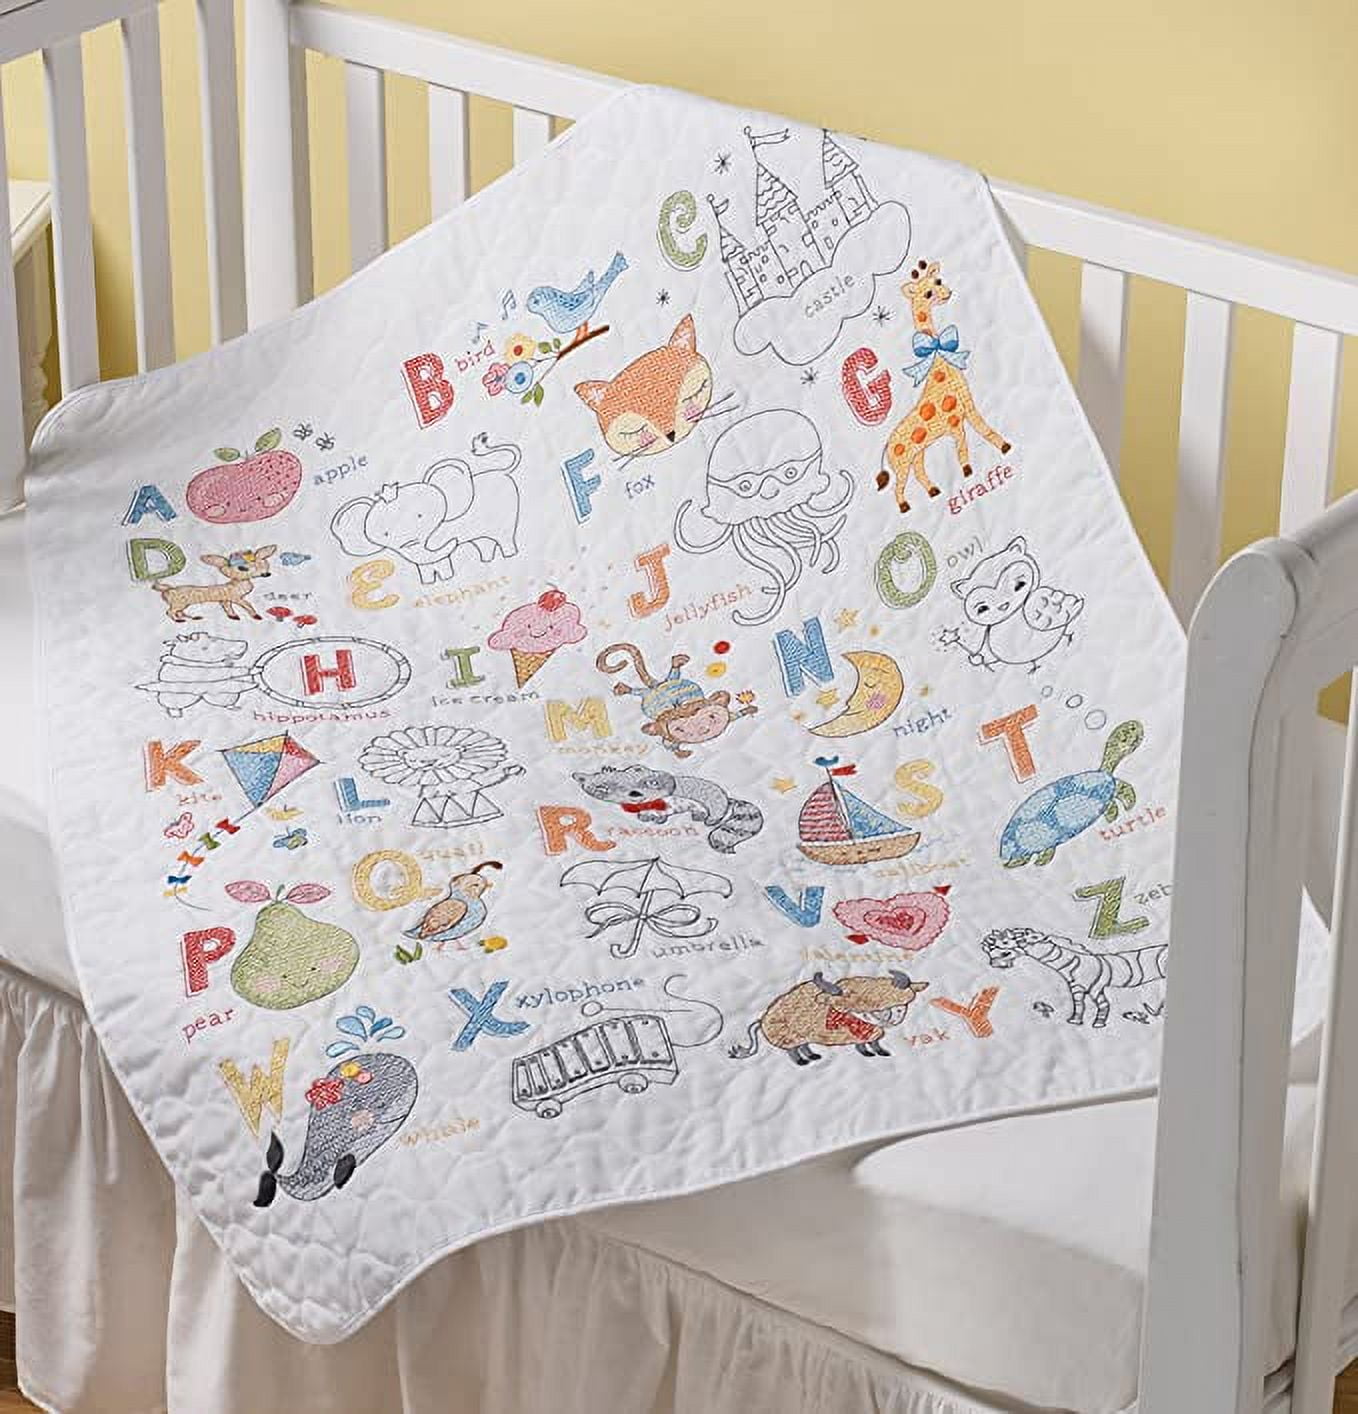 Bucilla ABC Baby Stamped Cross Stitch Crib Cover Kit